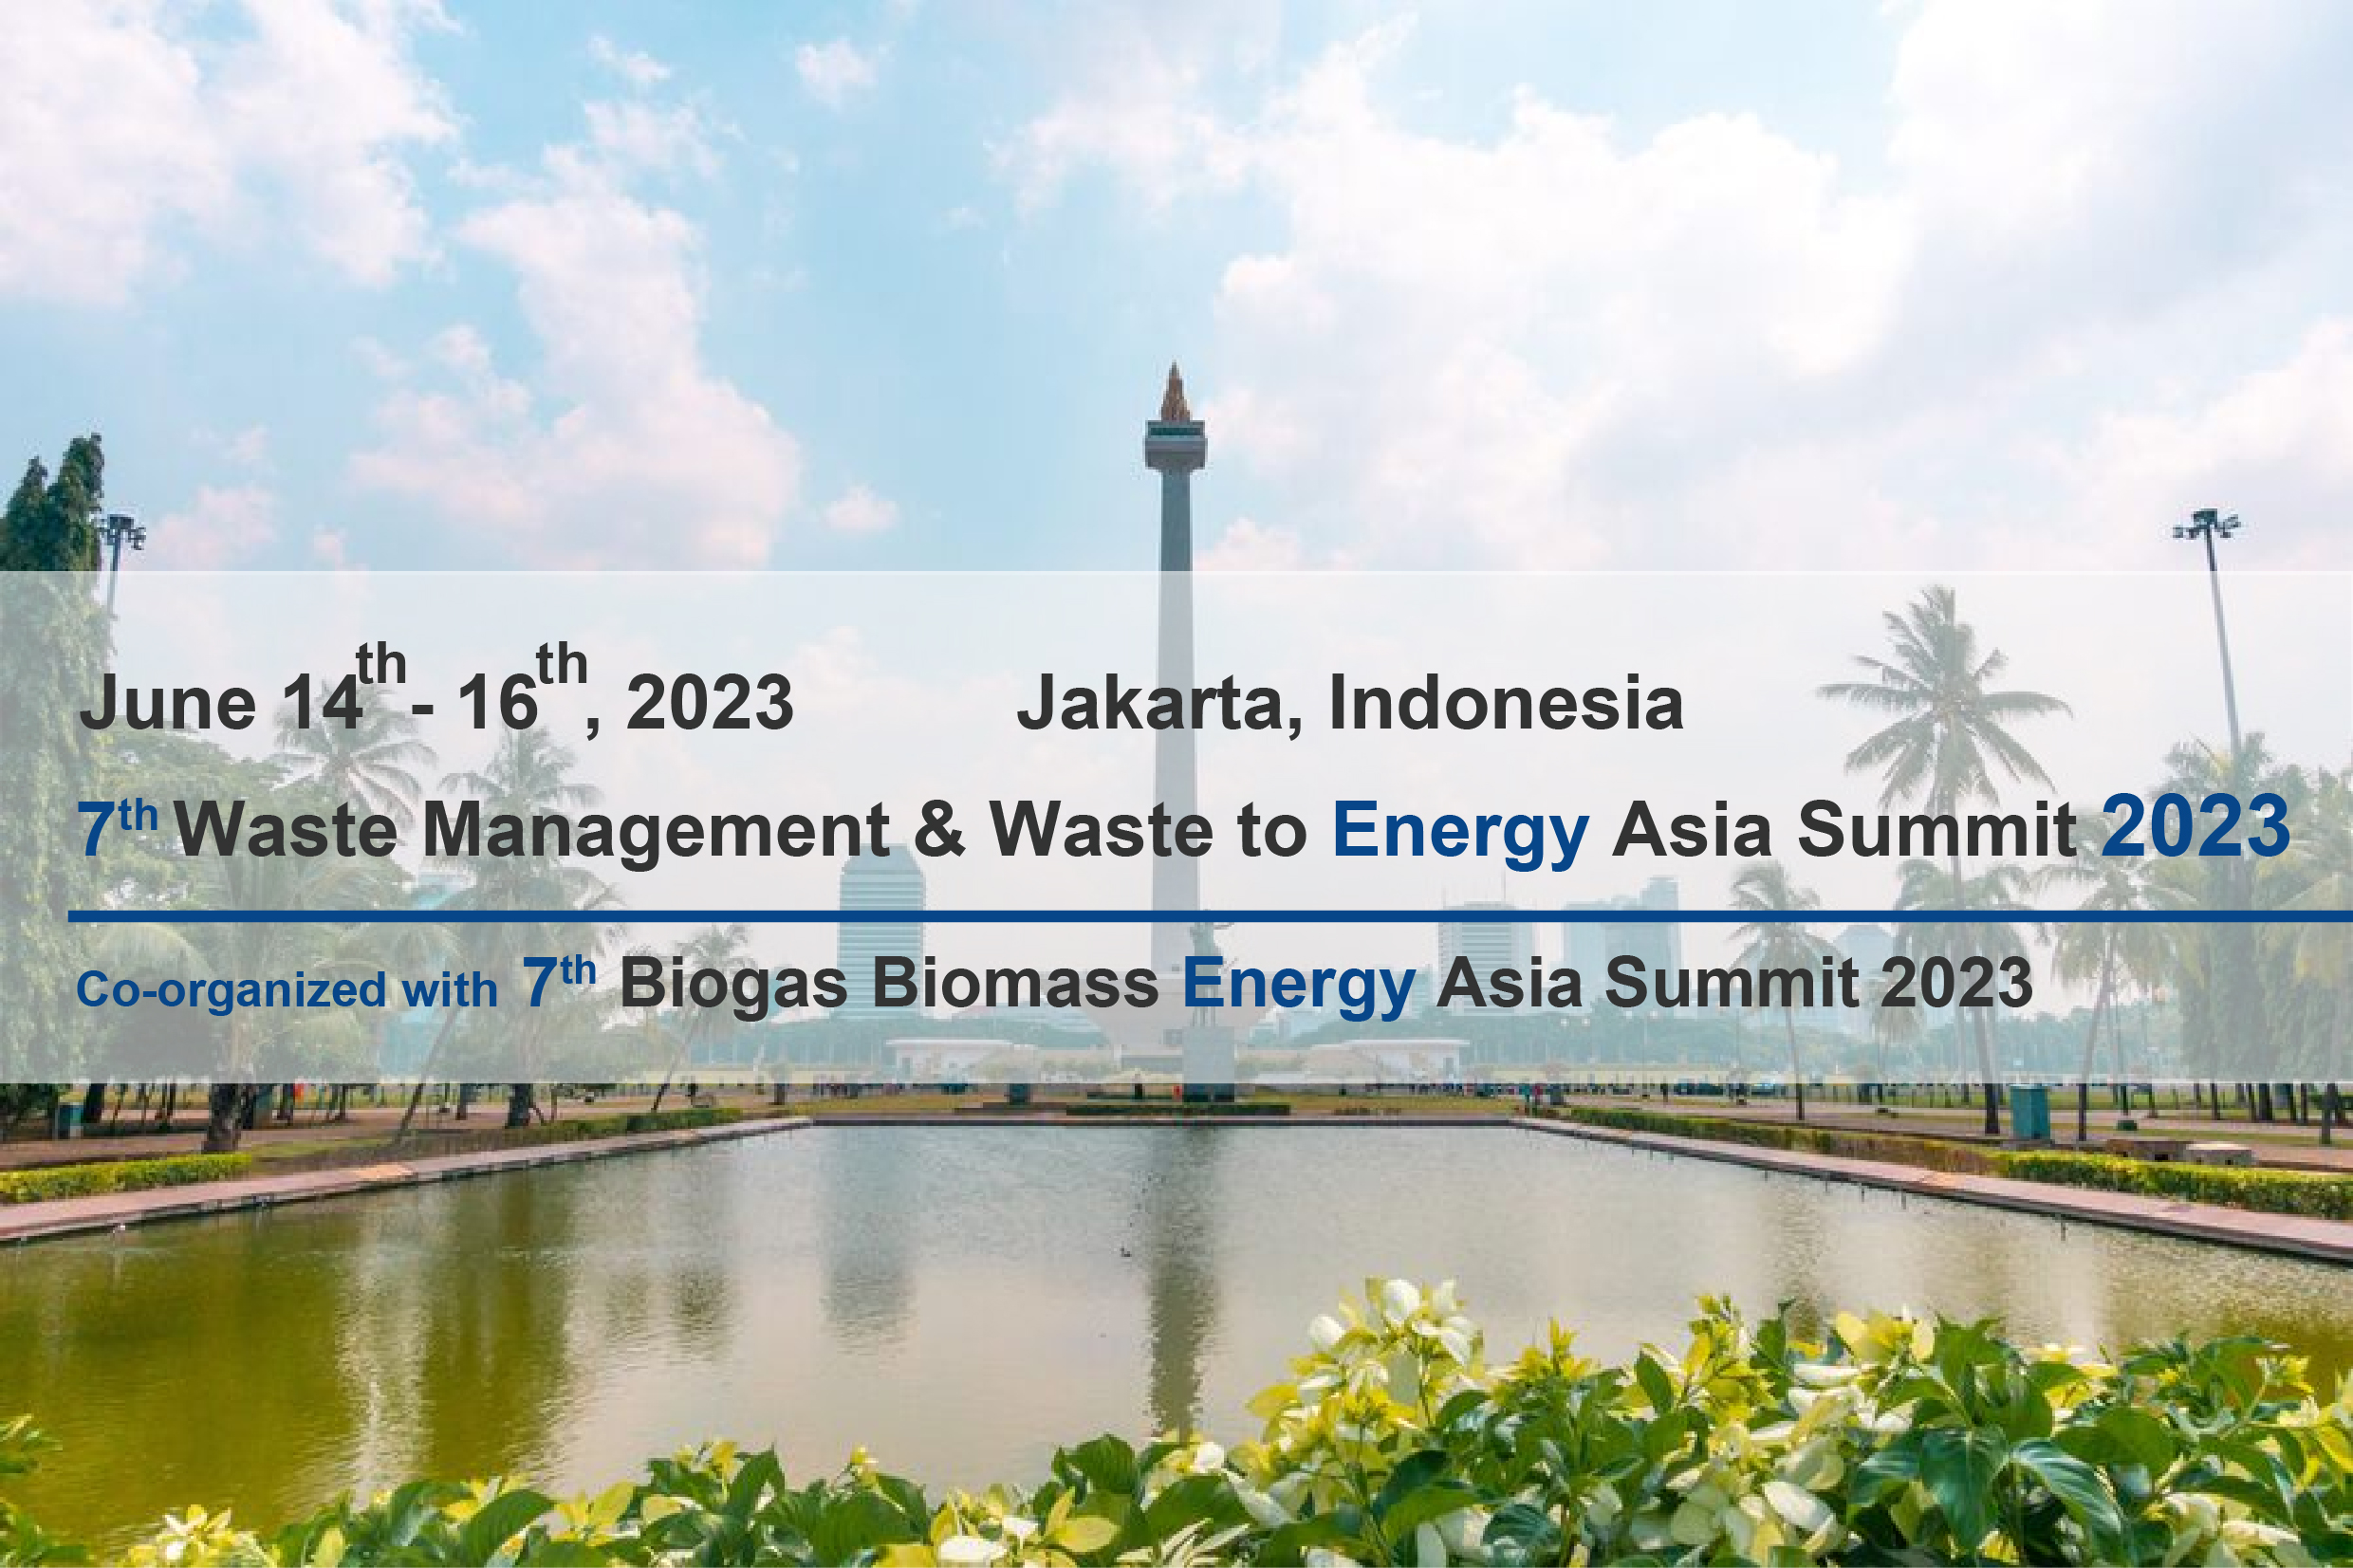 Waste to Energy Asia Summit 2023 Indonesia Focus